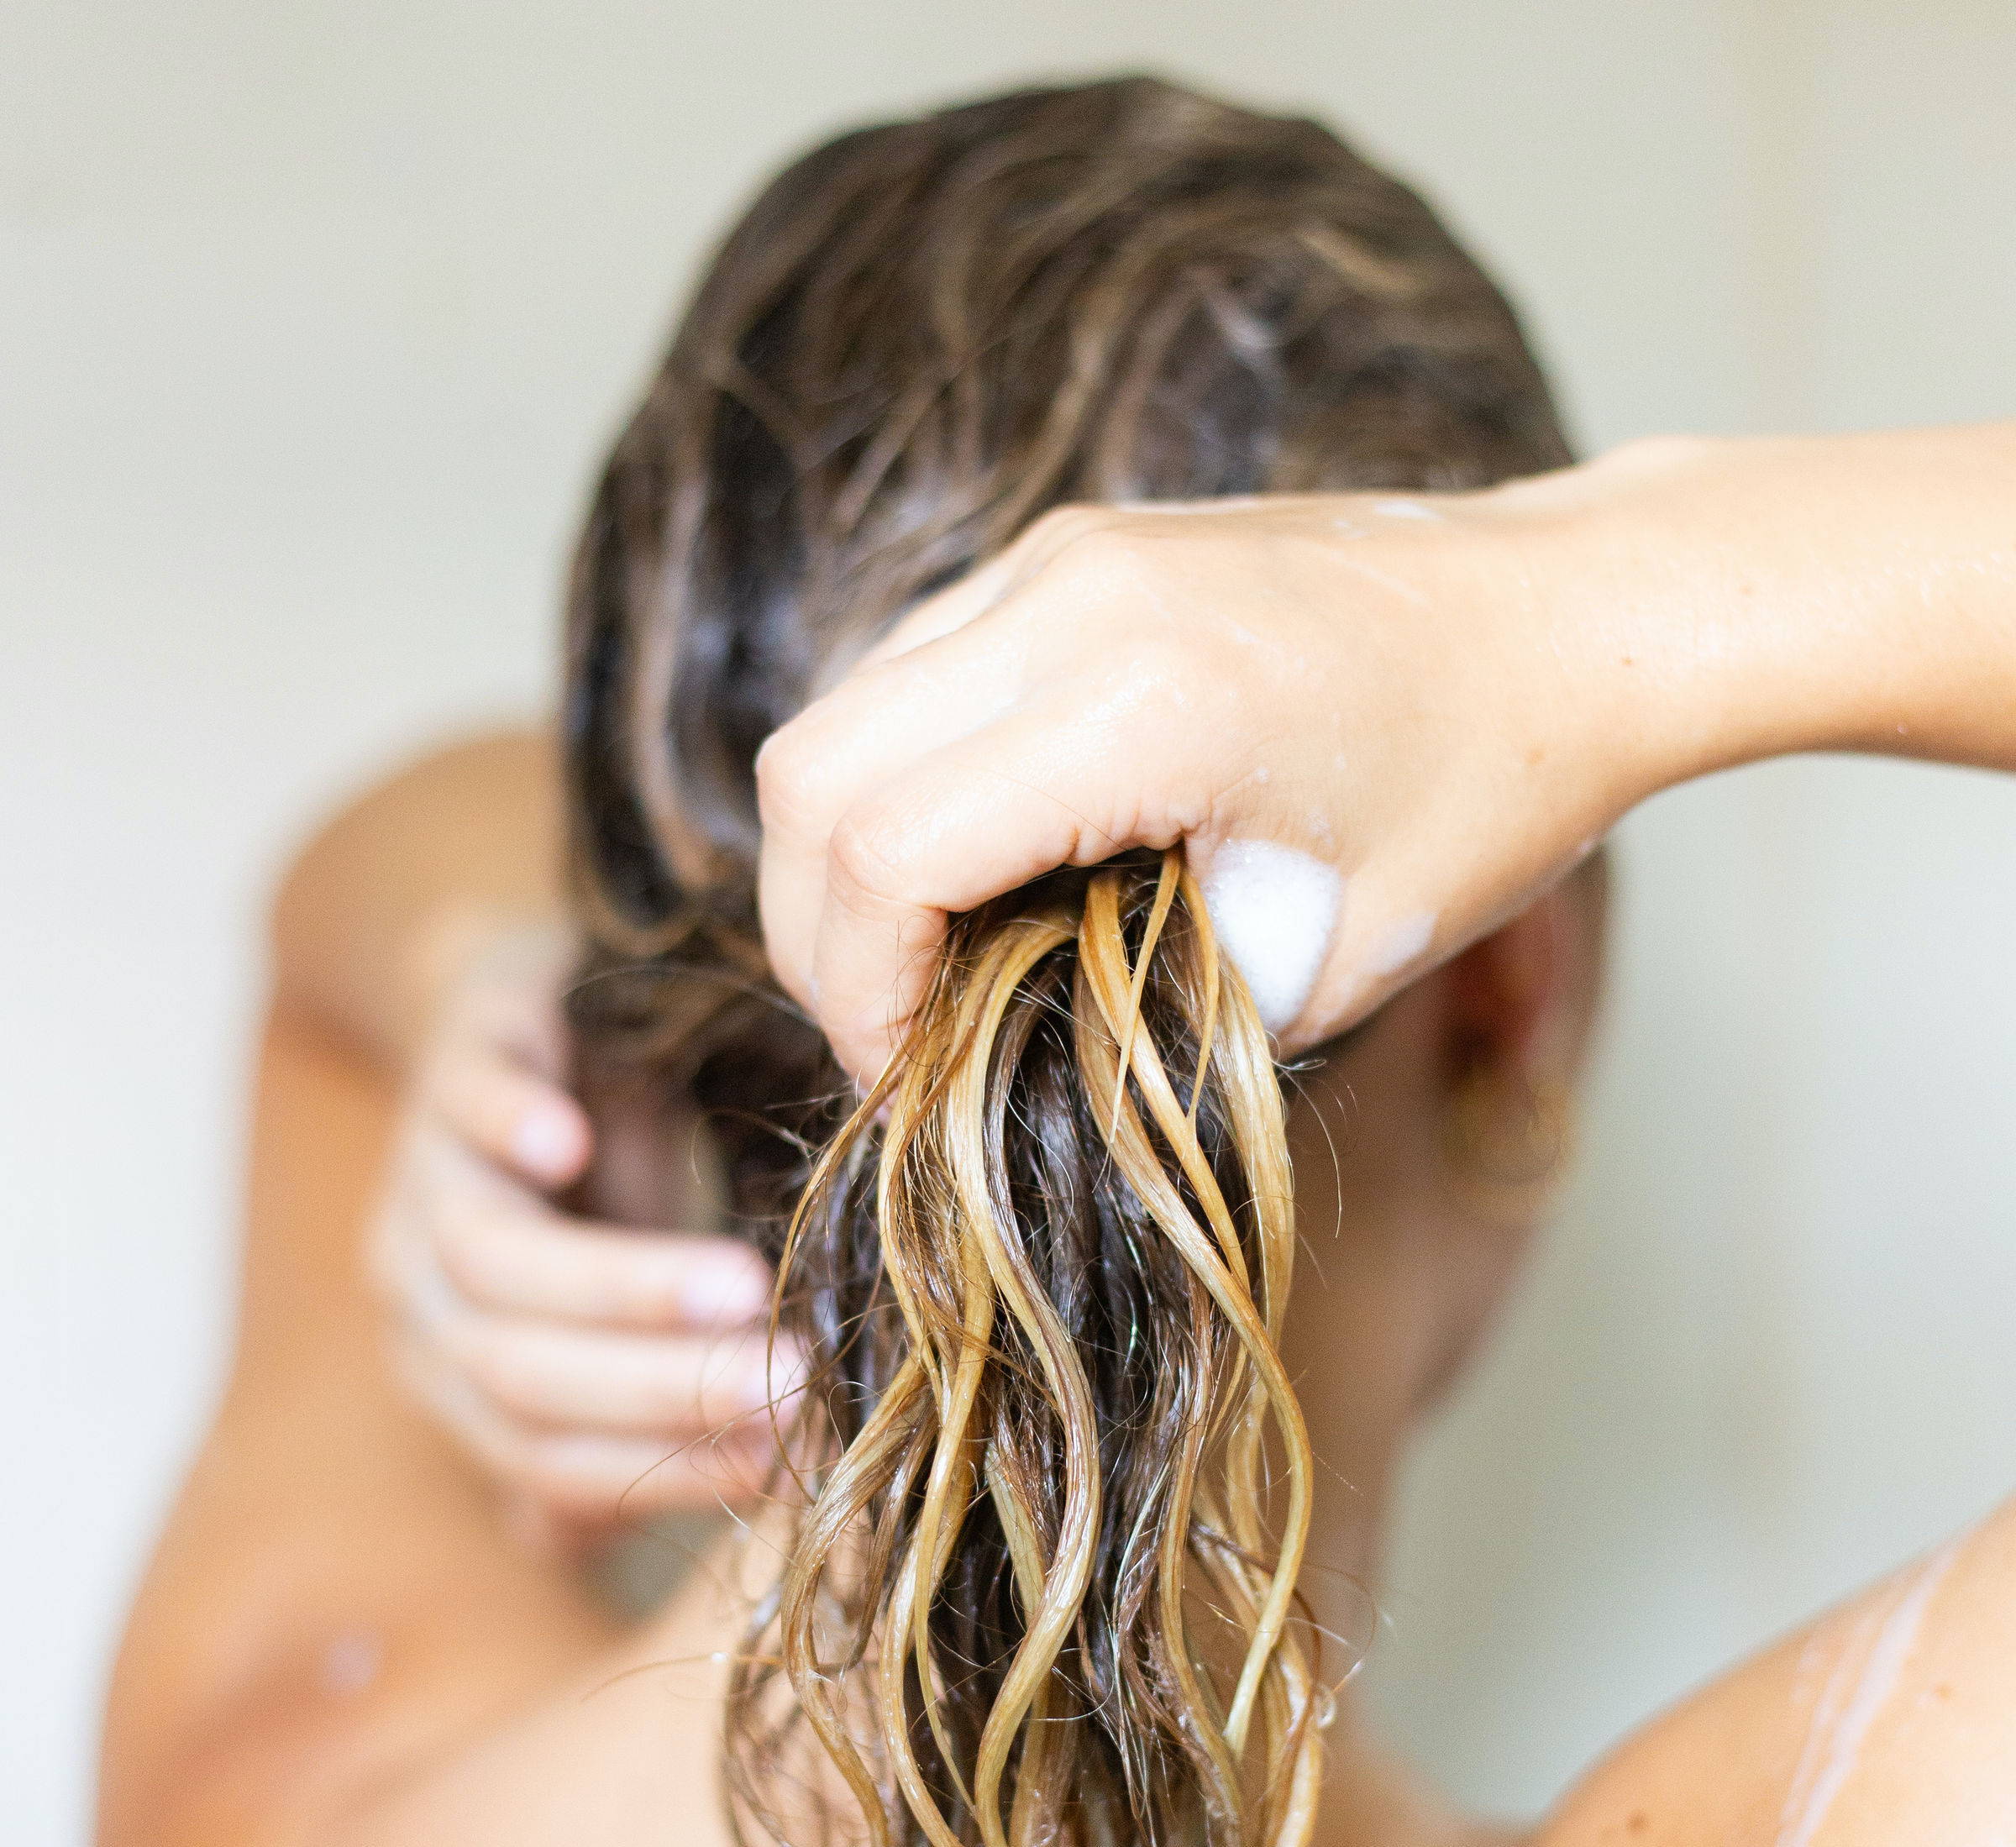 Davines washing hair in shower shampoo